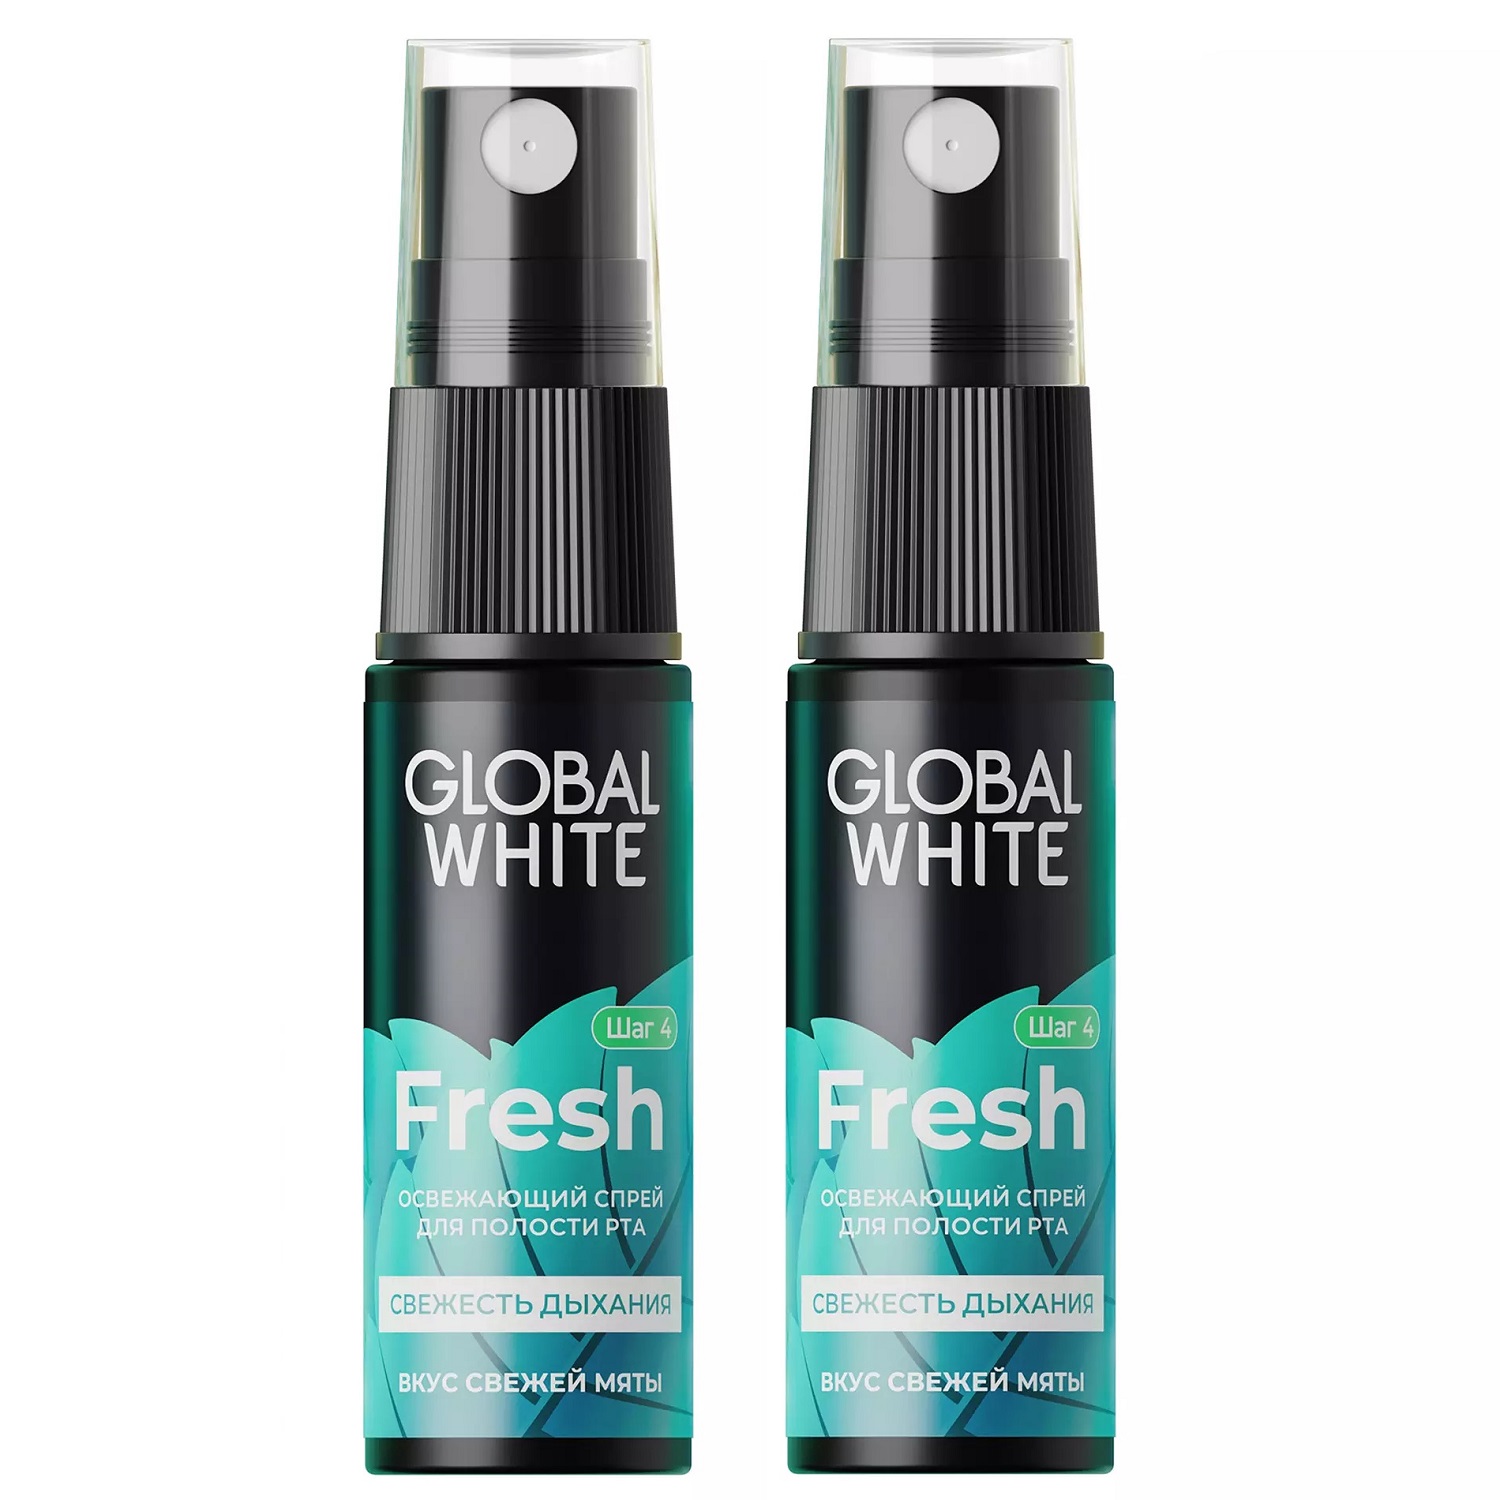 Global White Набор: освежающий спрей для полости рта «Свежее дыхание», 2 х 15 мл (Global White, Поддержание эффекта отбеливания) waterdent спрей для полости рта увлажняющий 15 мл